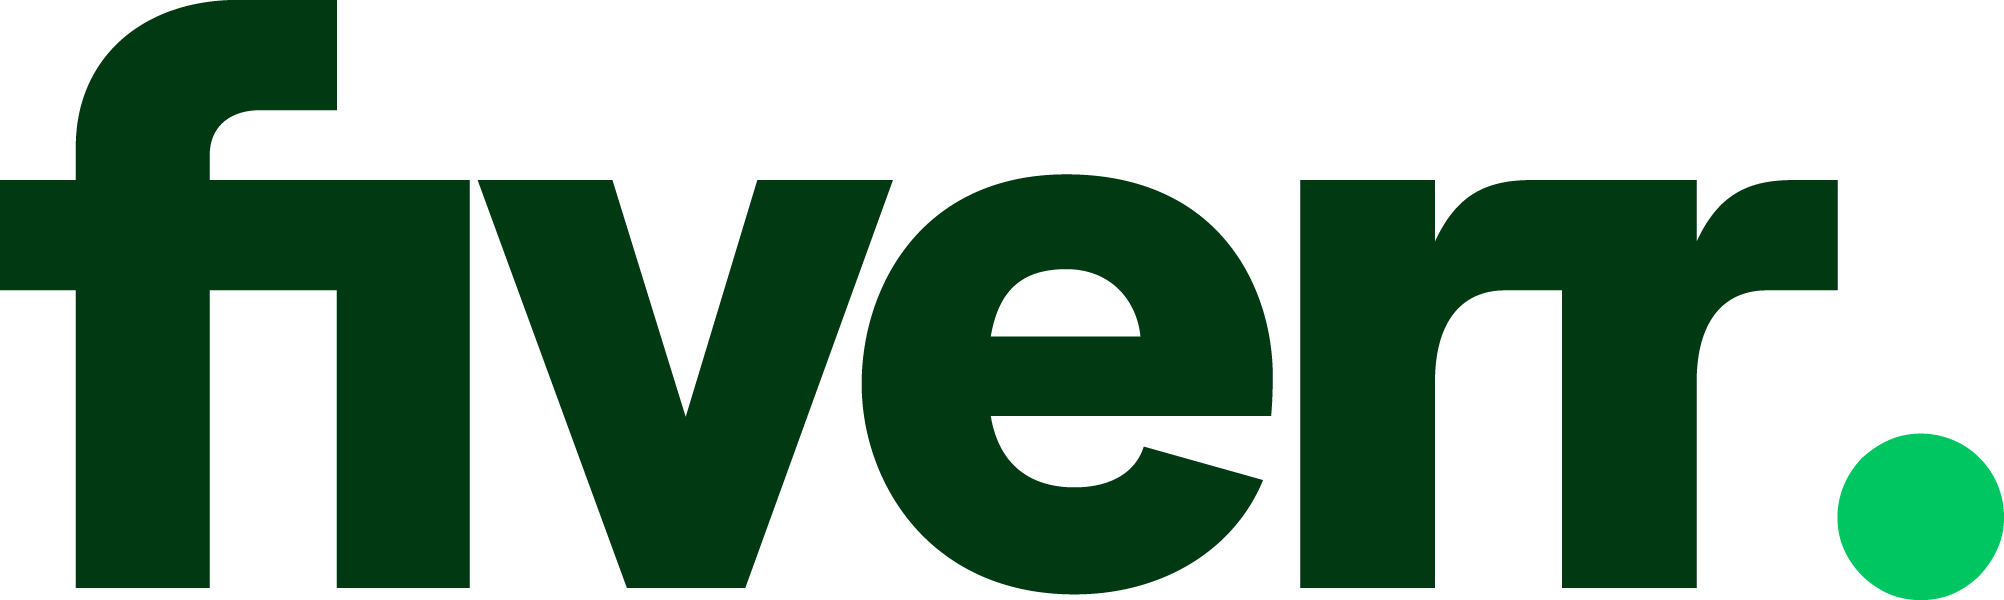 Fiverr logo.